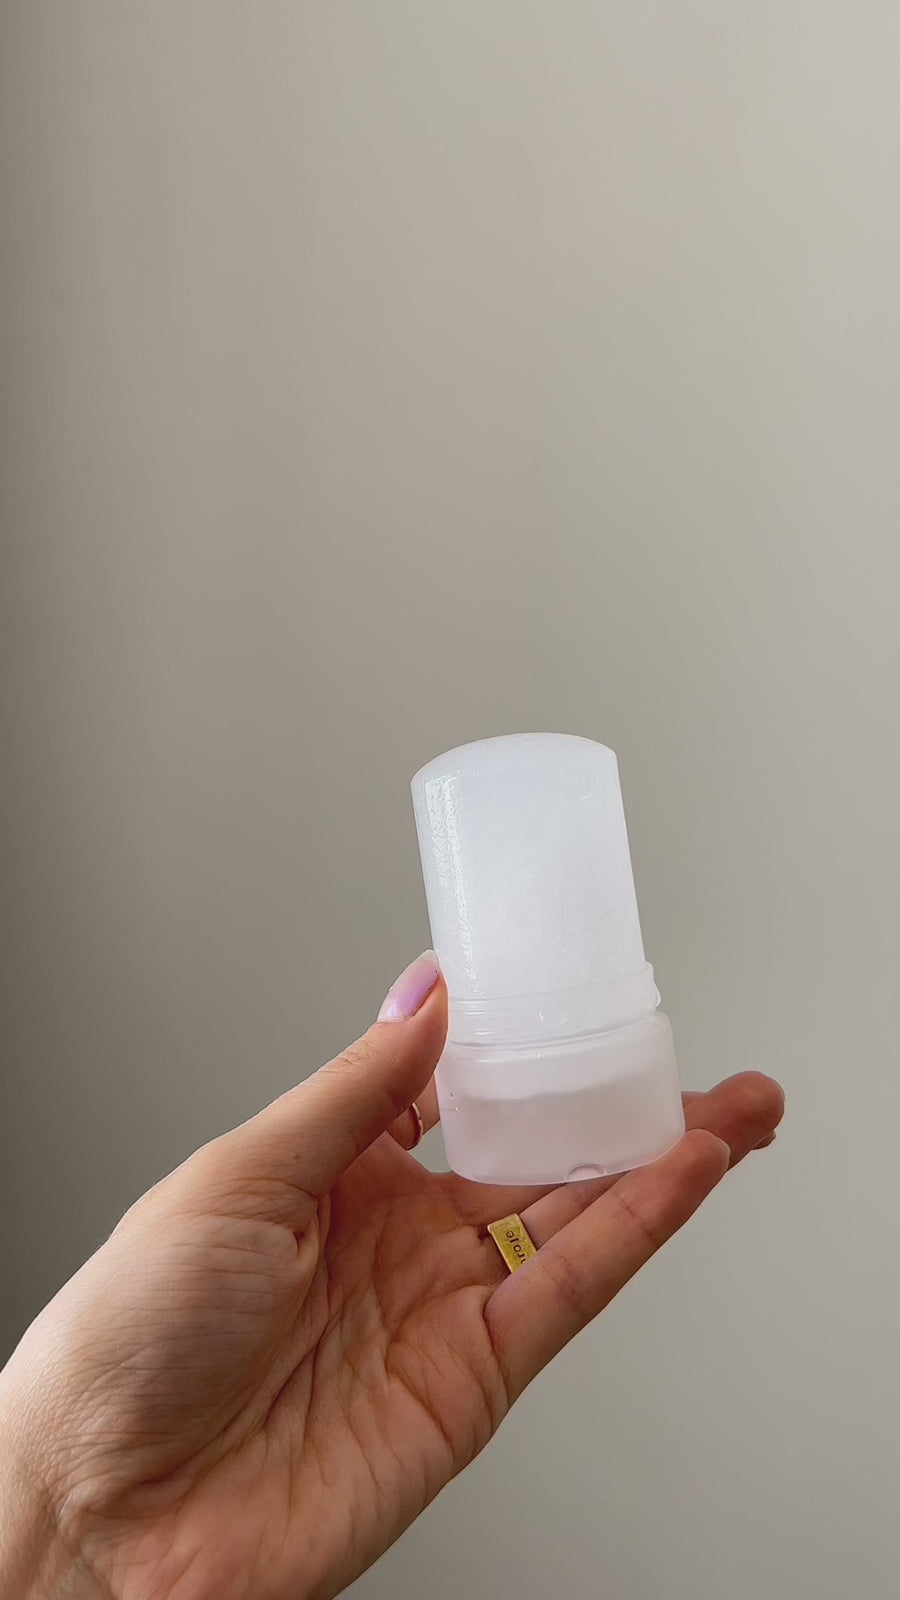 Desodorante Cristal Stick Vegano 120g Alva